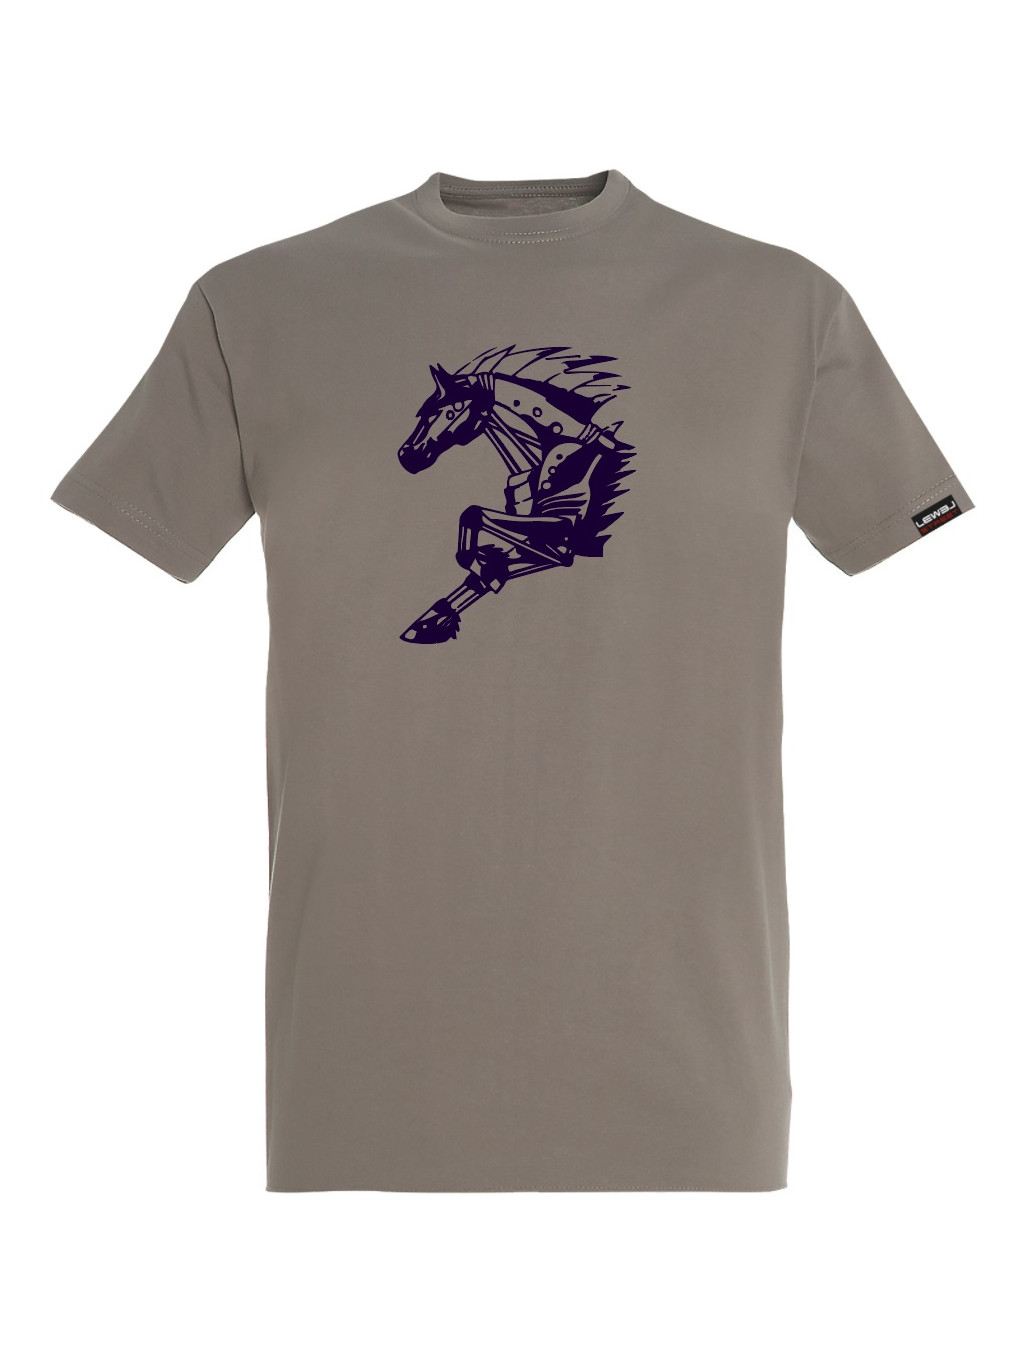 Mech horse dark purple on l.grey